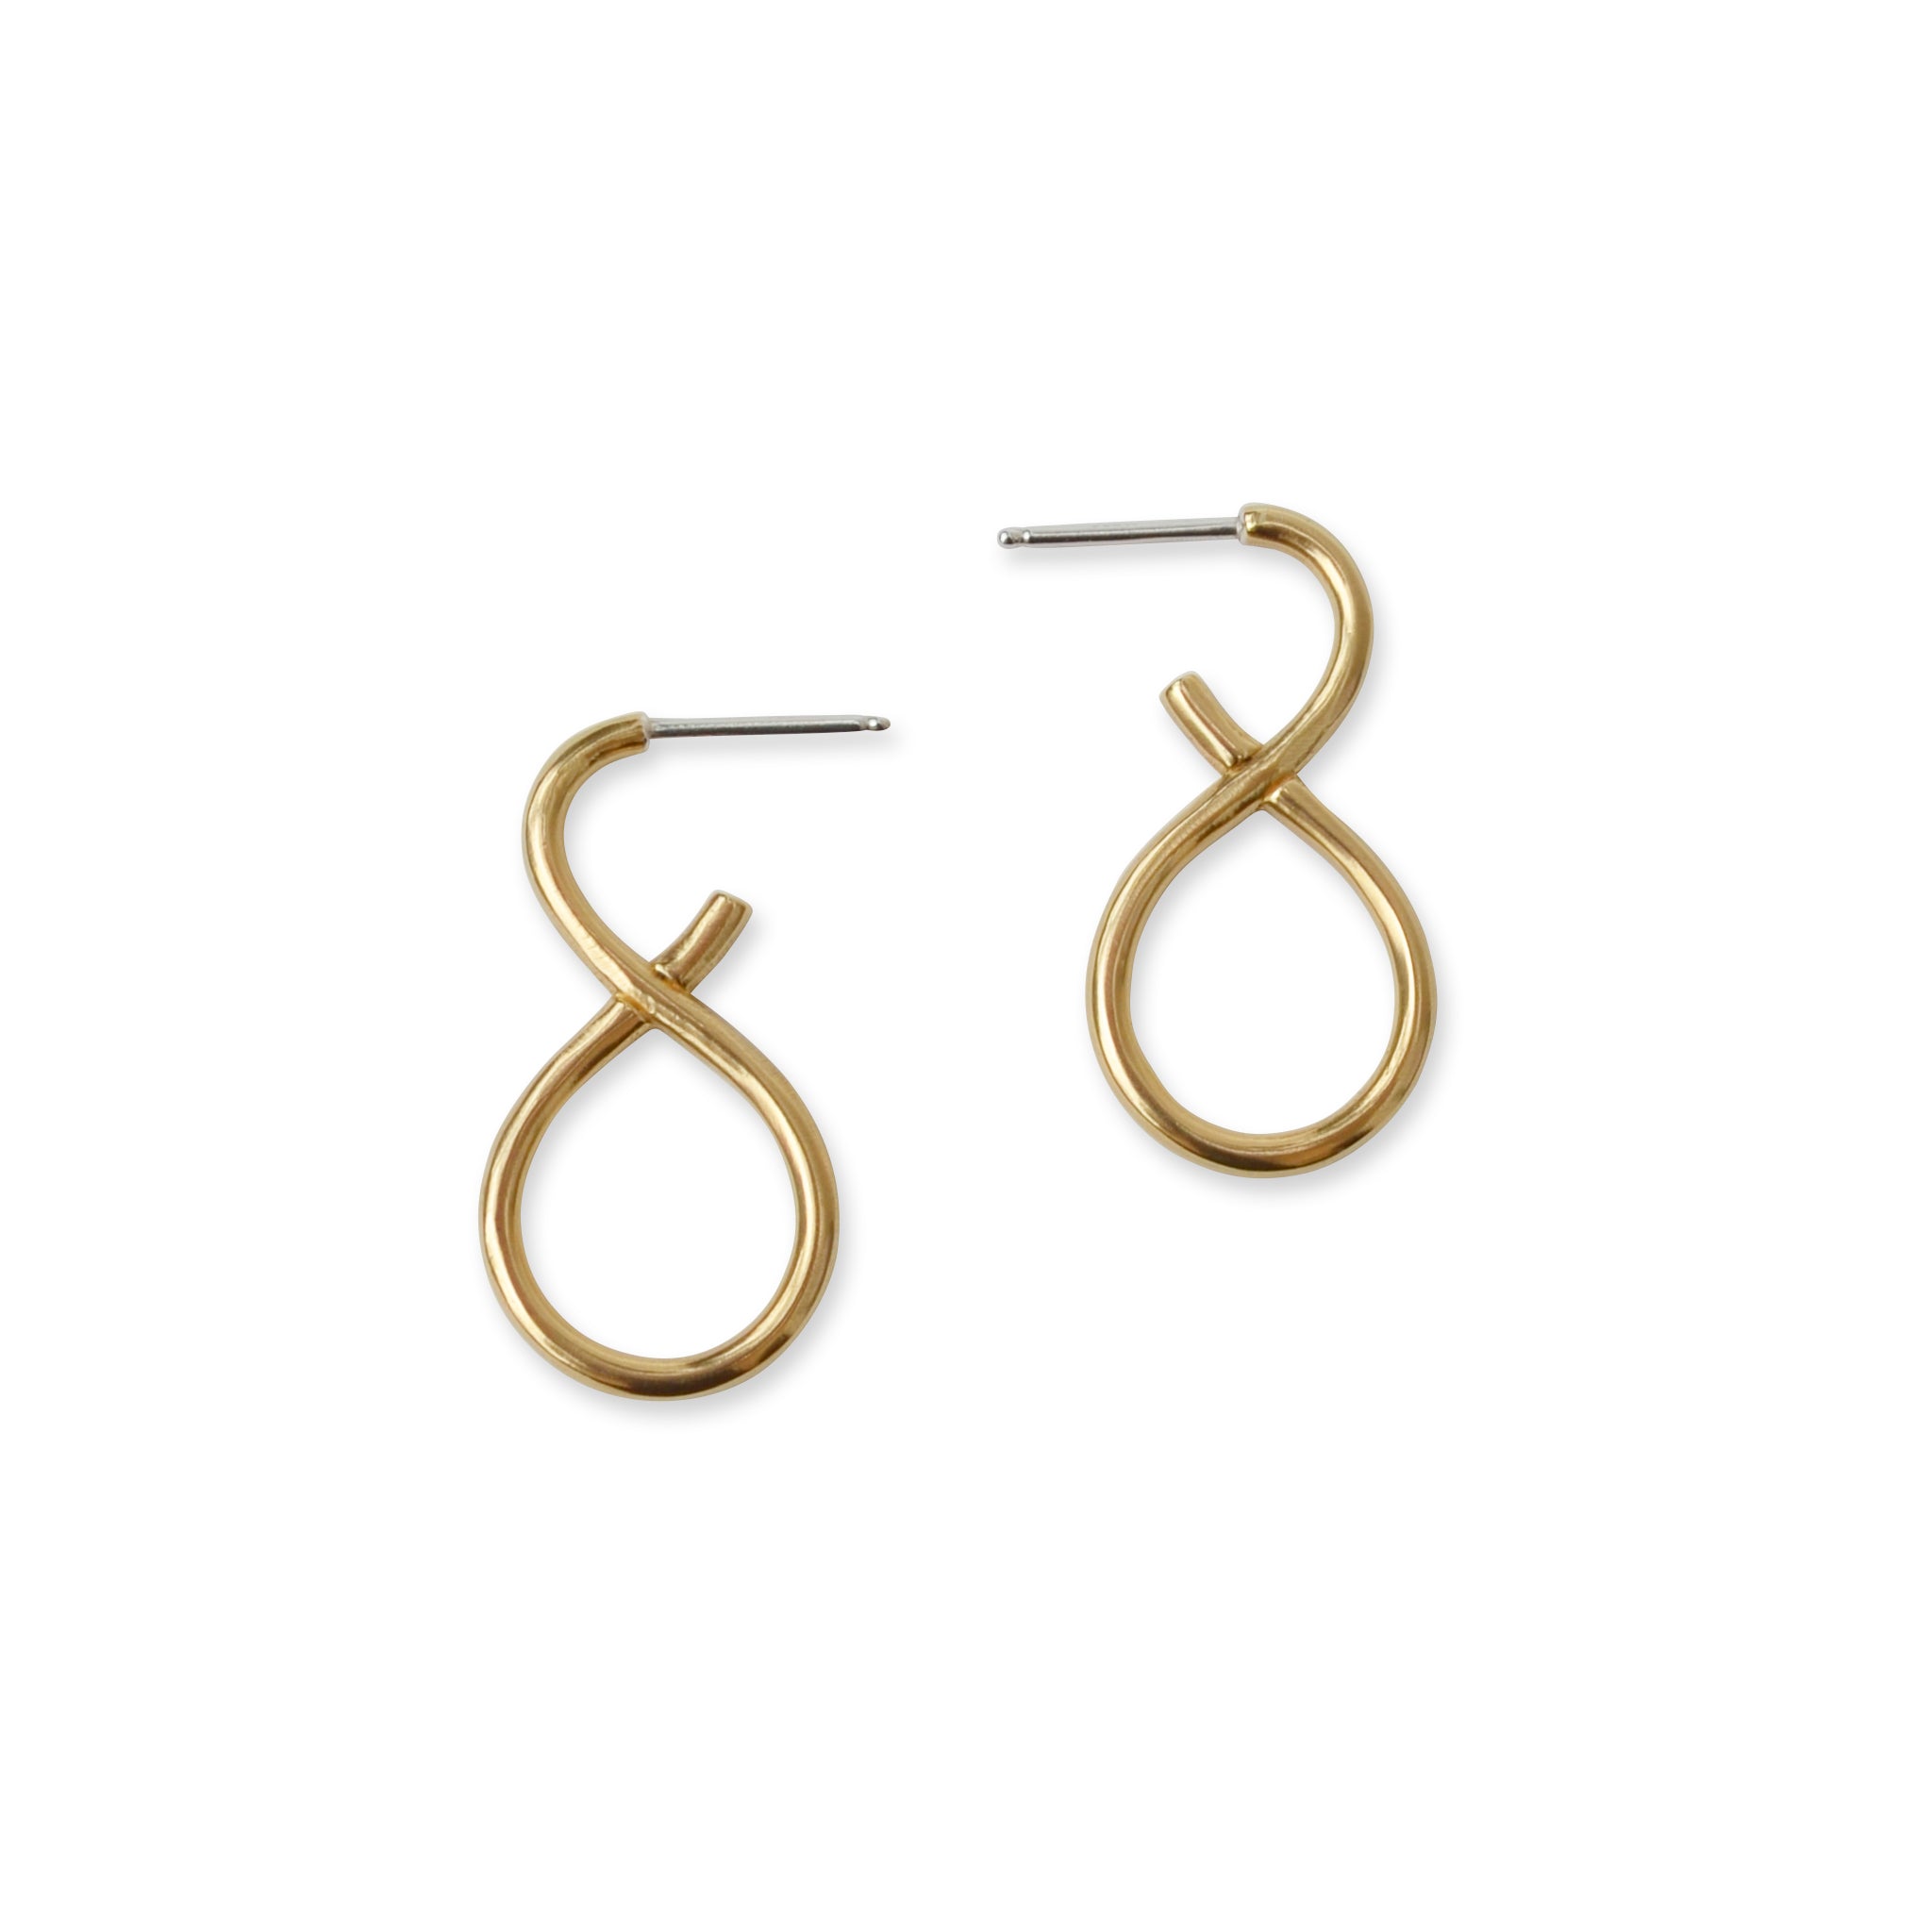 Infinite Hoops Sm. – Natalie Joy Jewelry